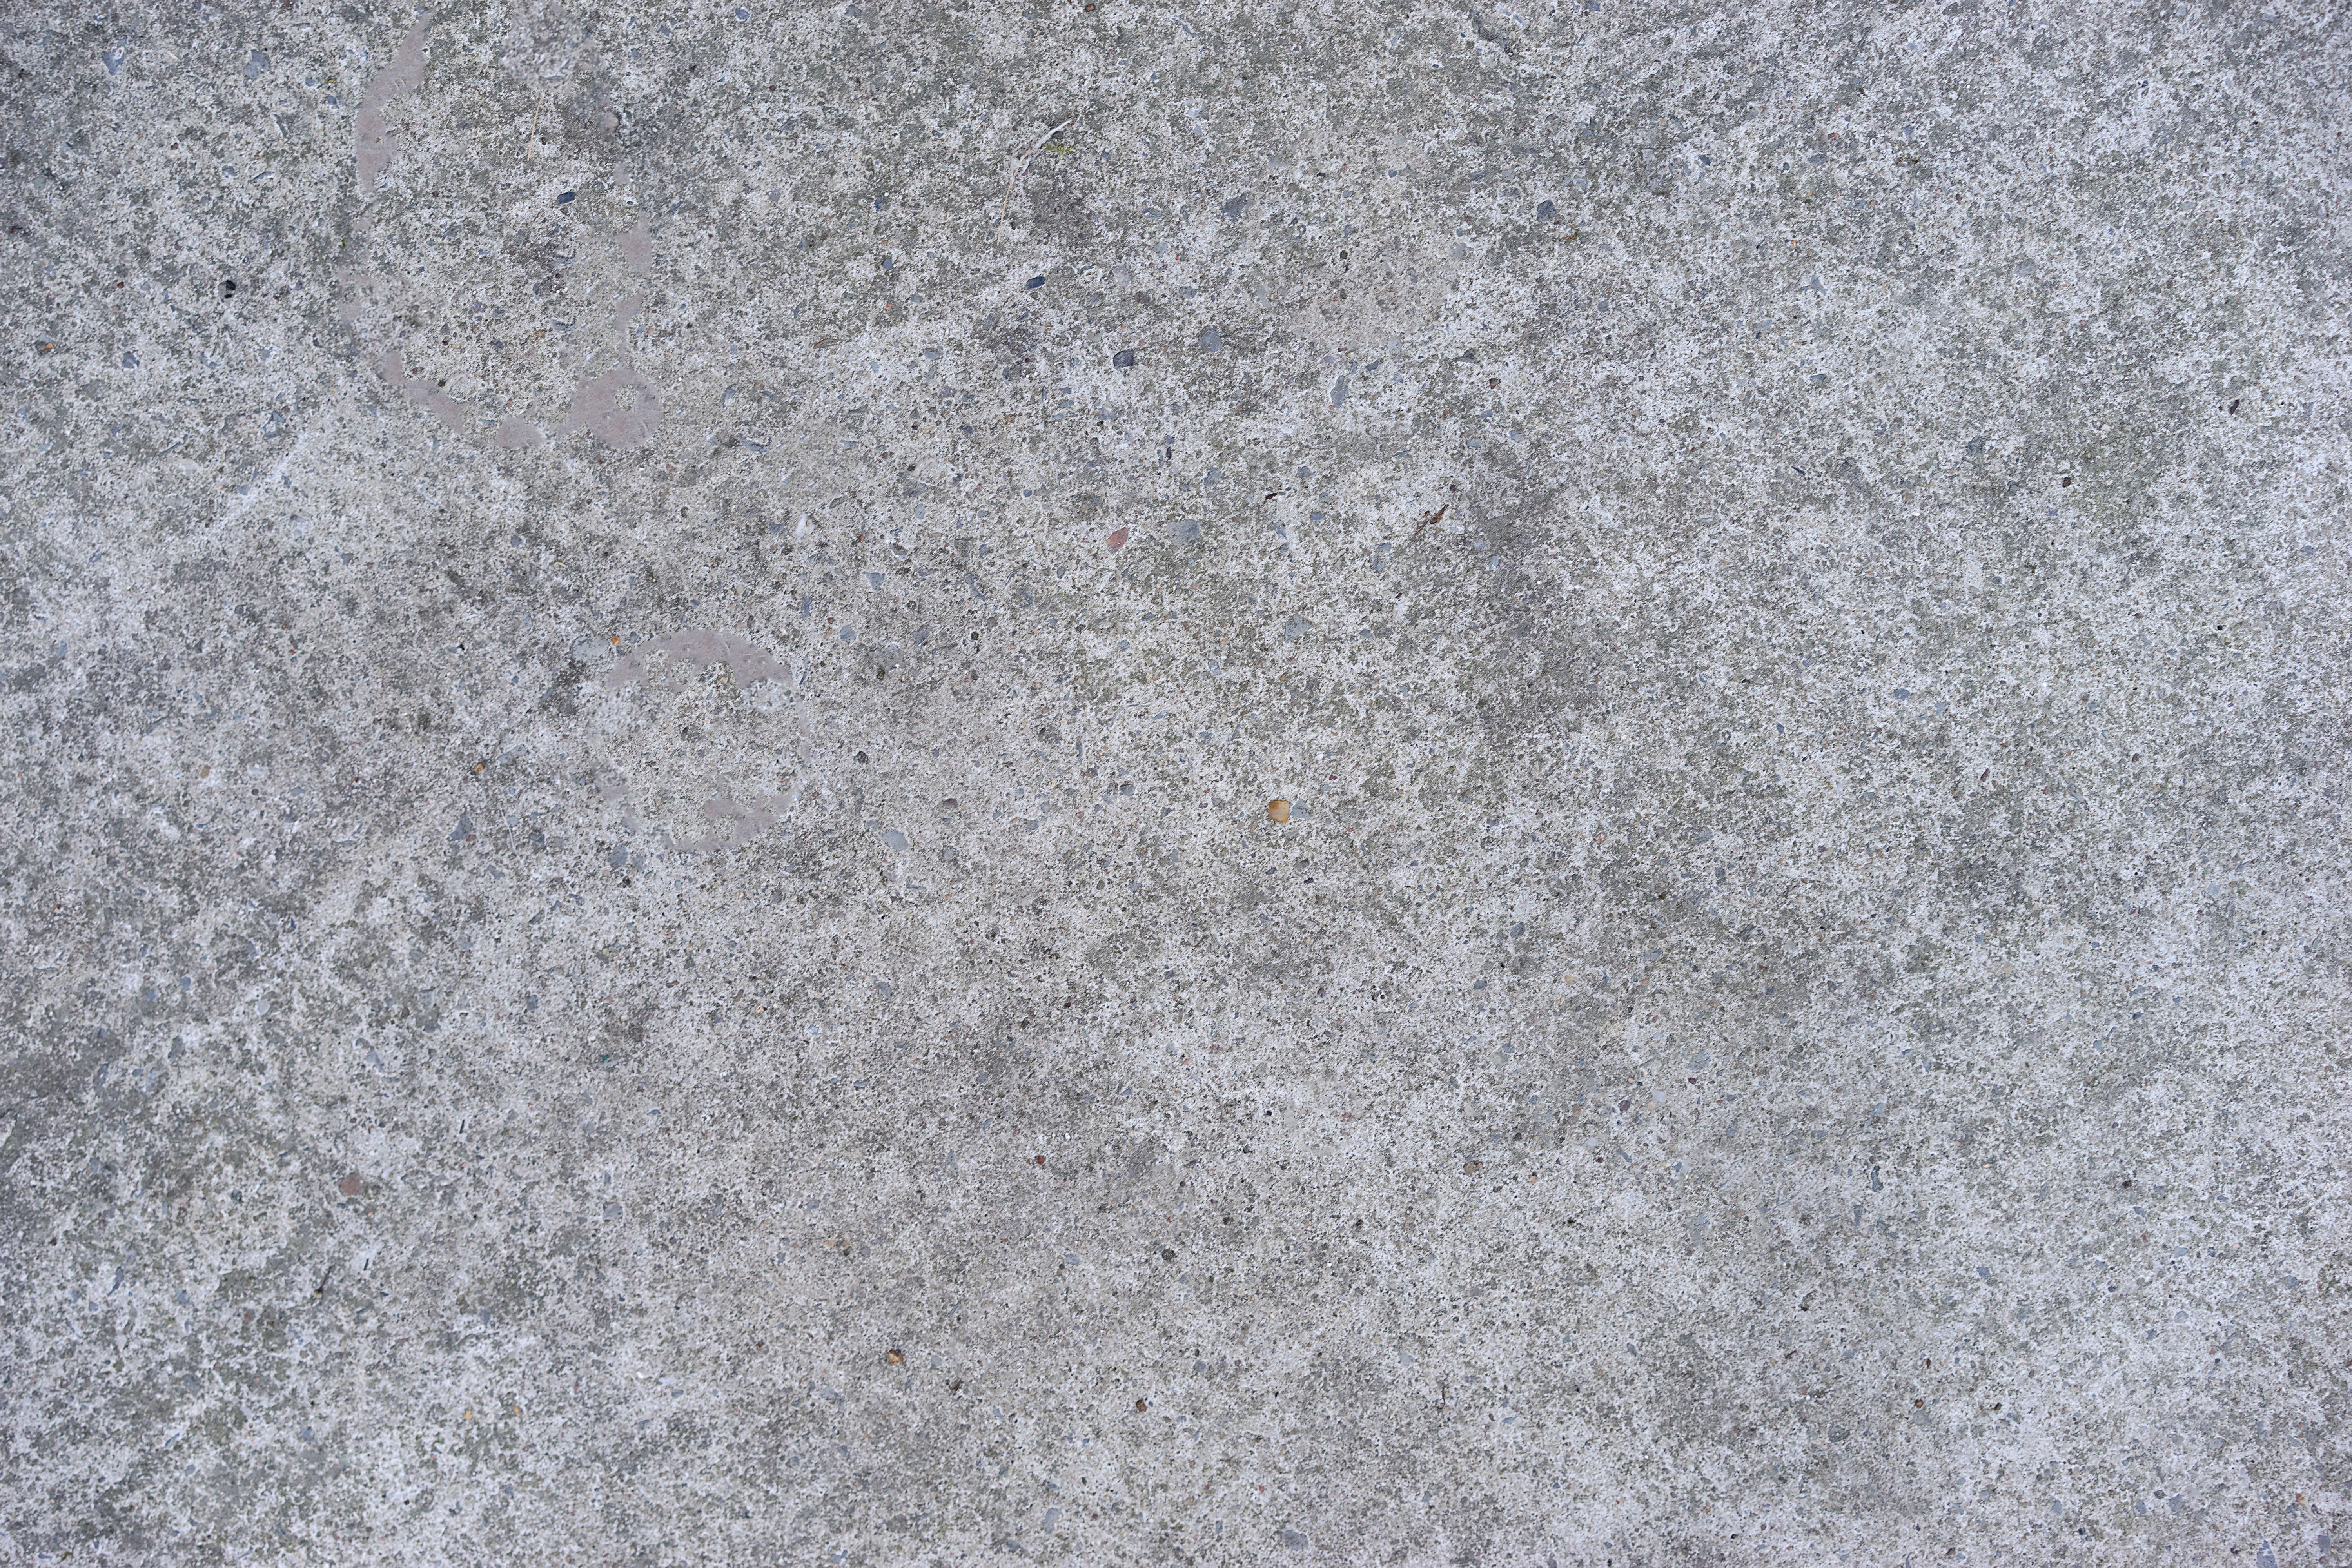 Weathered stone texture photo